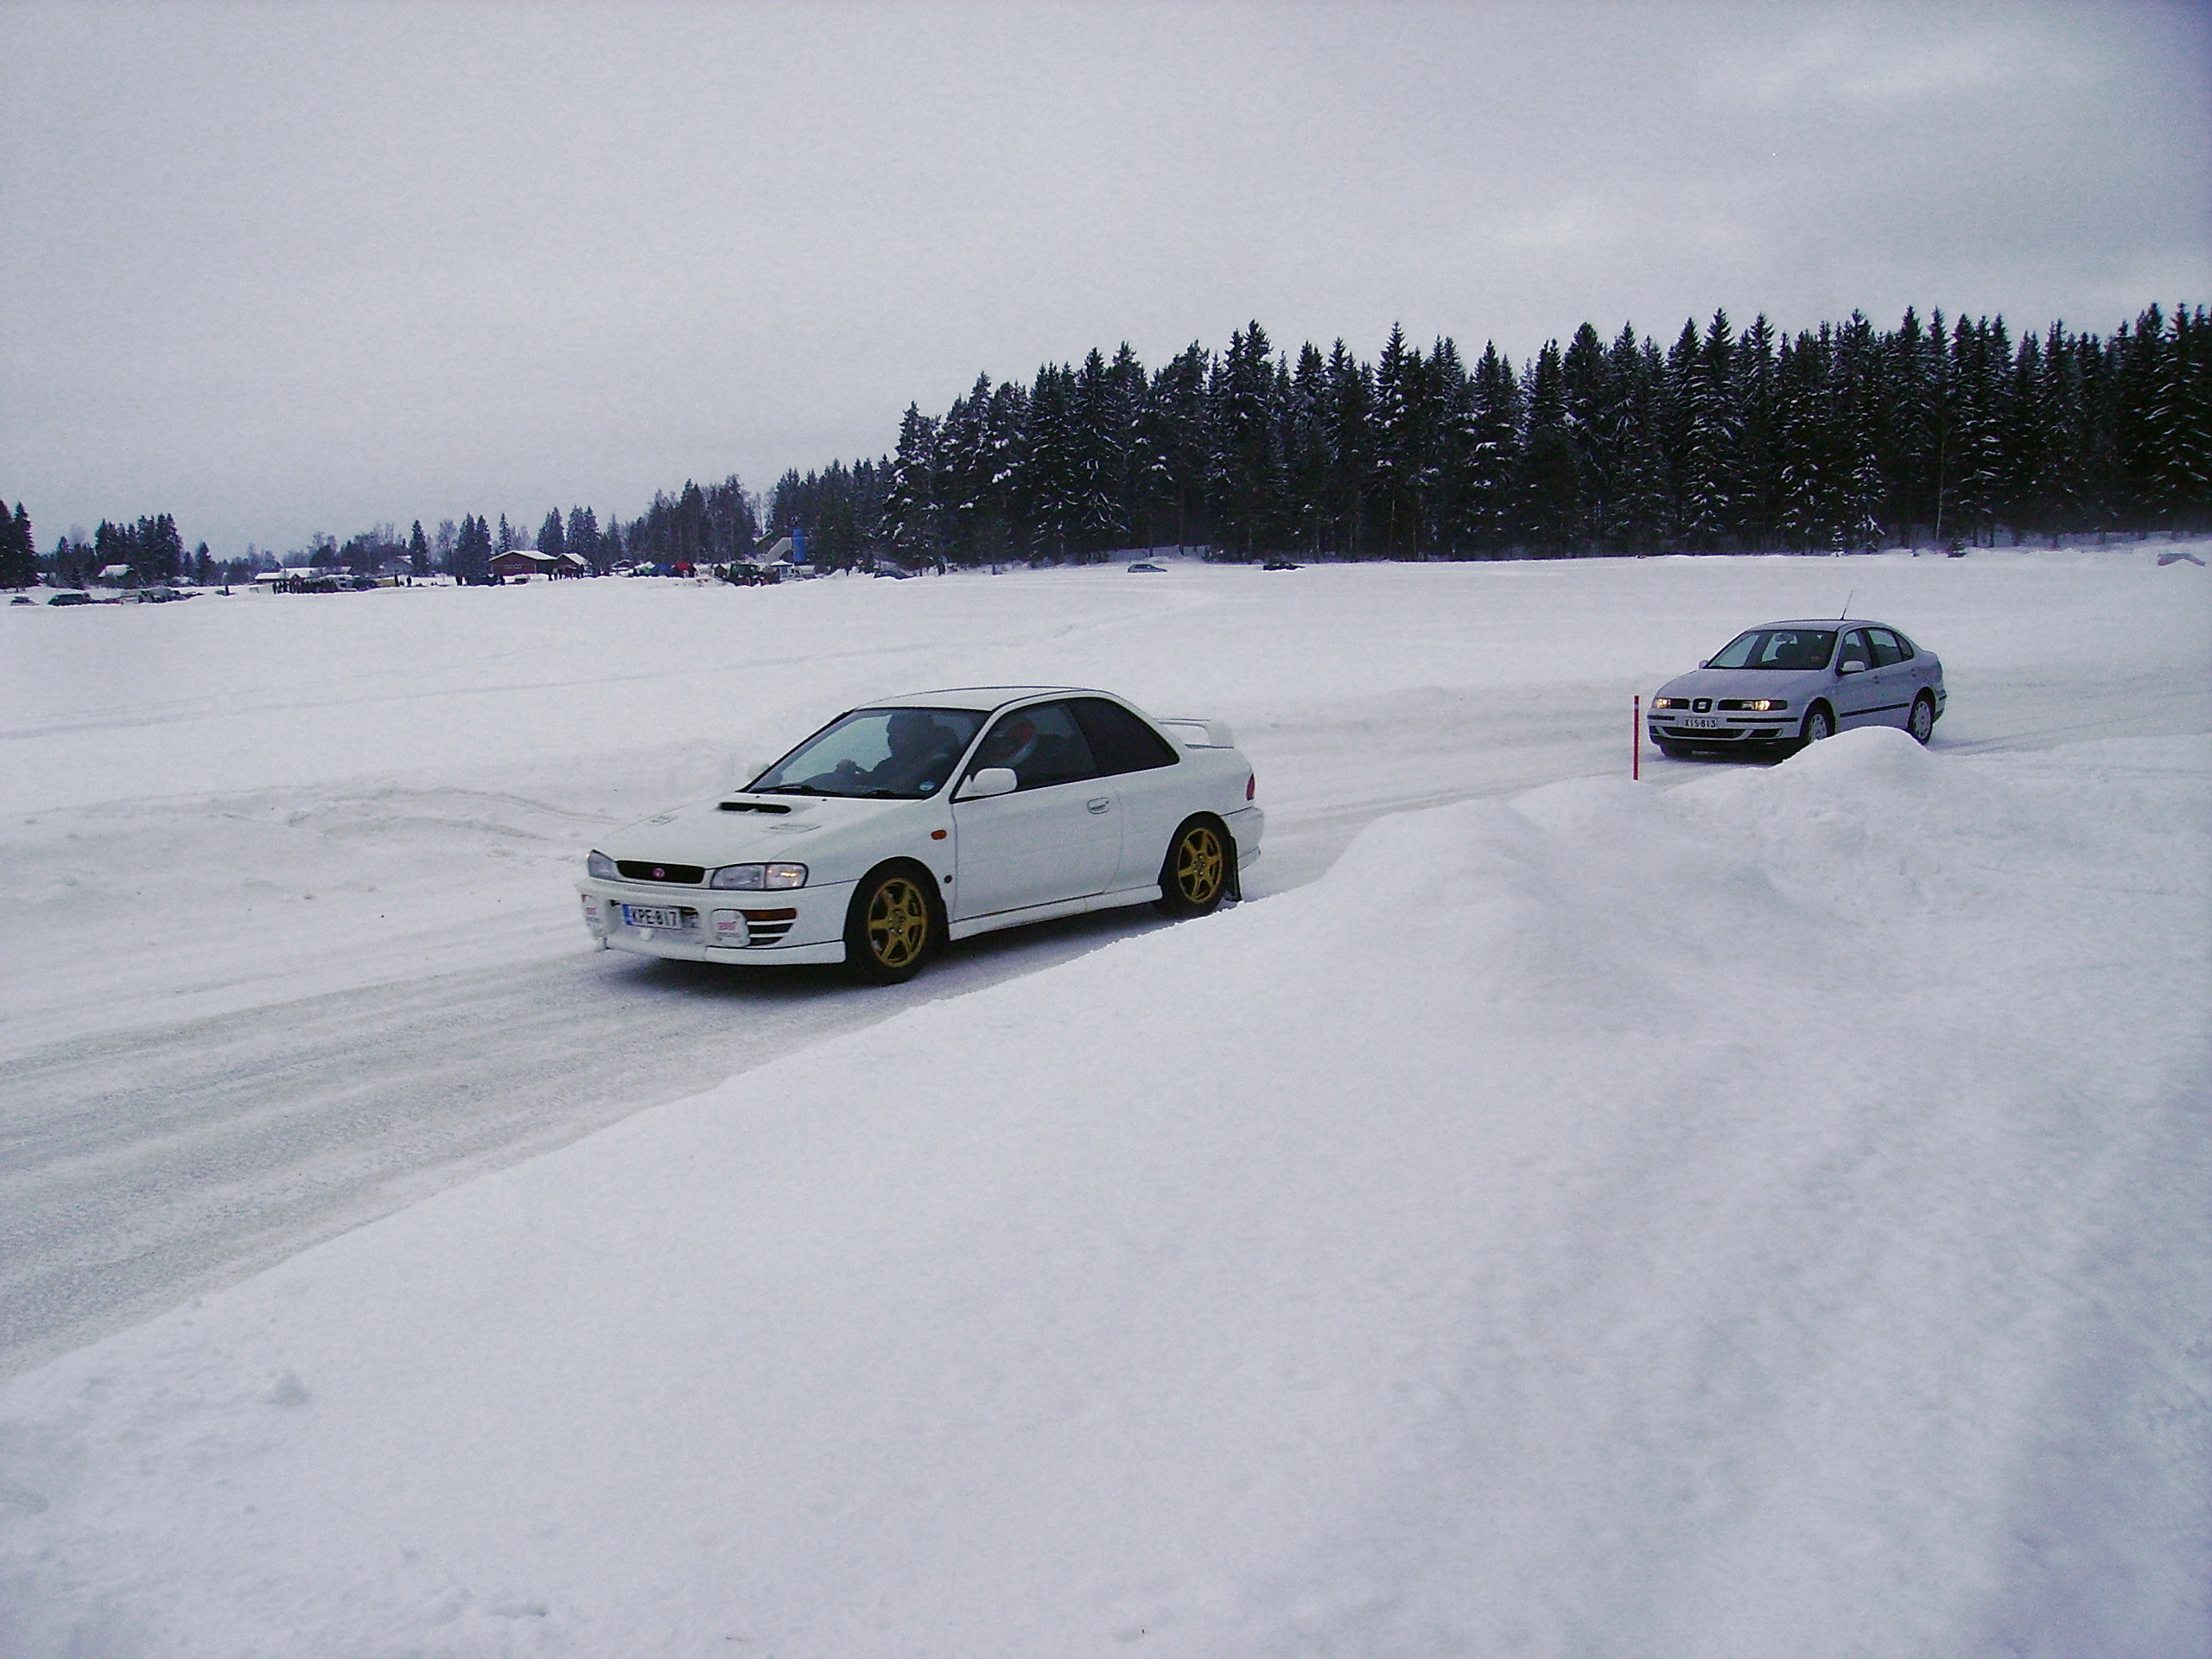 JÃ¤Ã¤radalle.com Pukkila 13.2.2010, Valkoinen Subaru Impreza